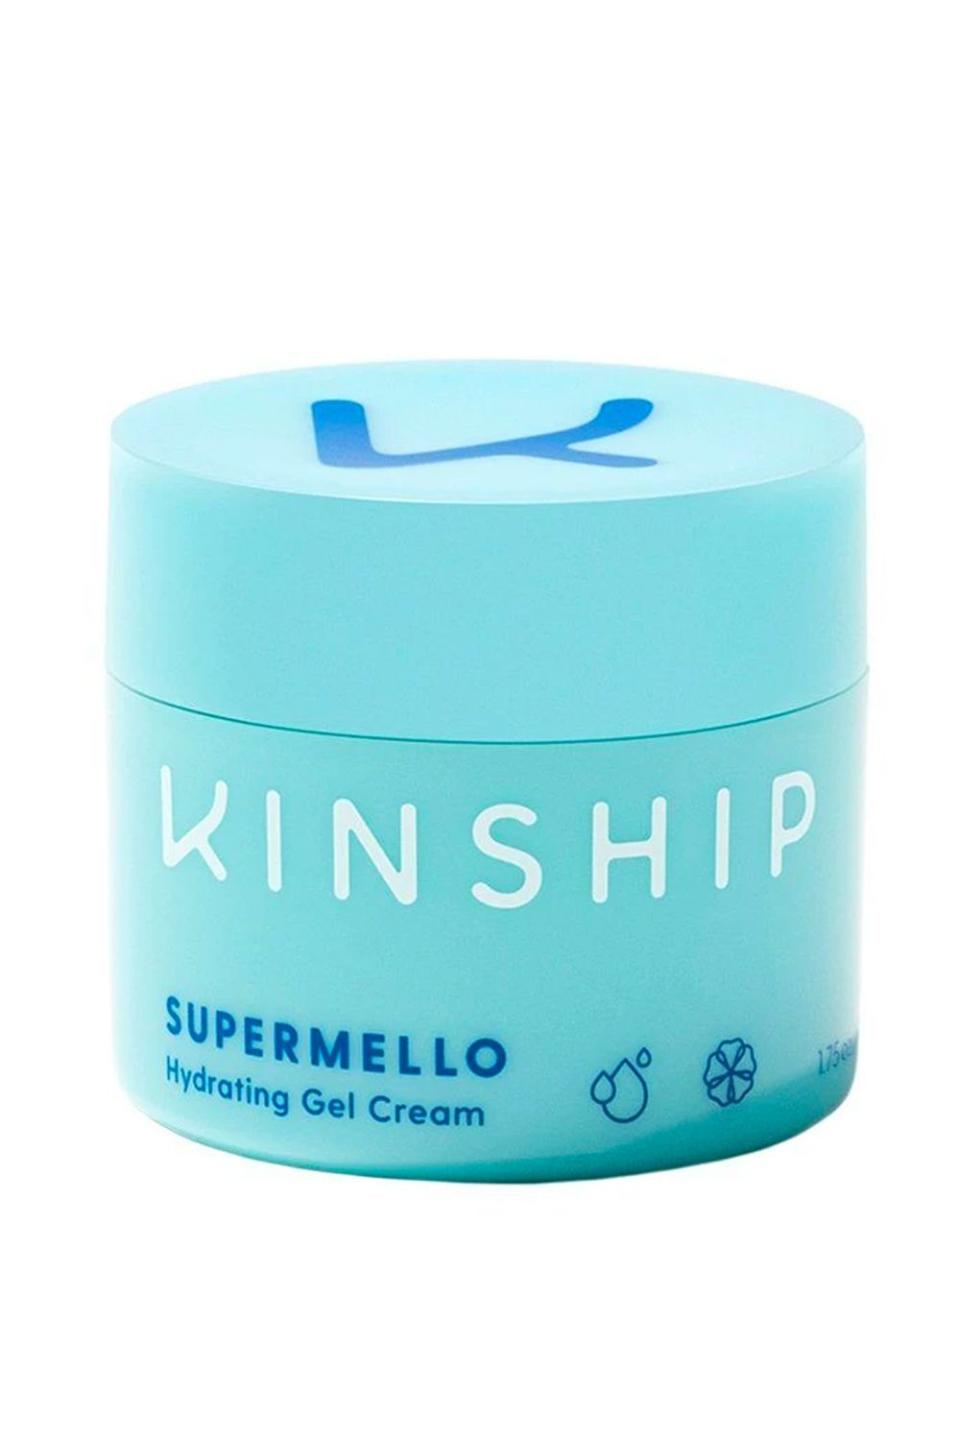 7) Kinship Supermello Hydrating Gel-Cream Moisturizer